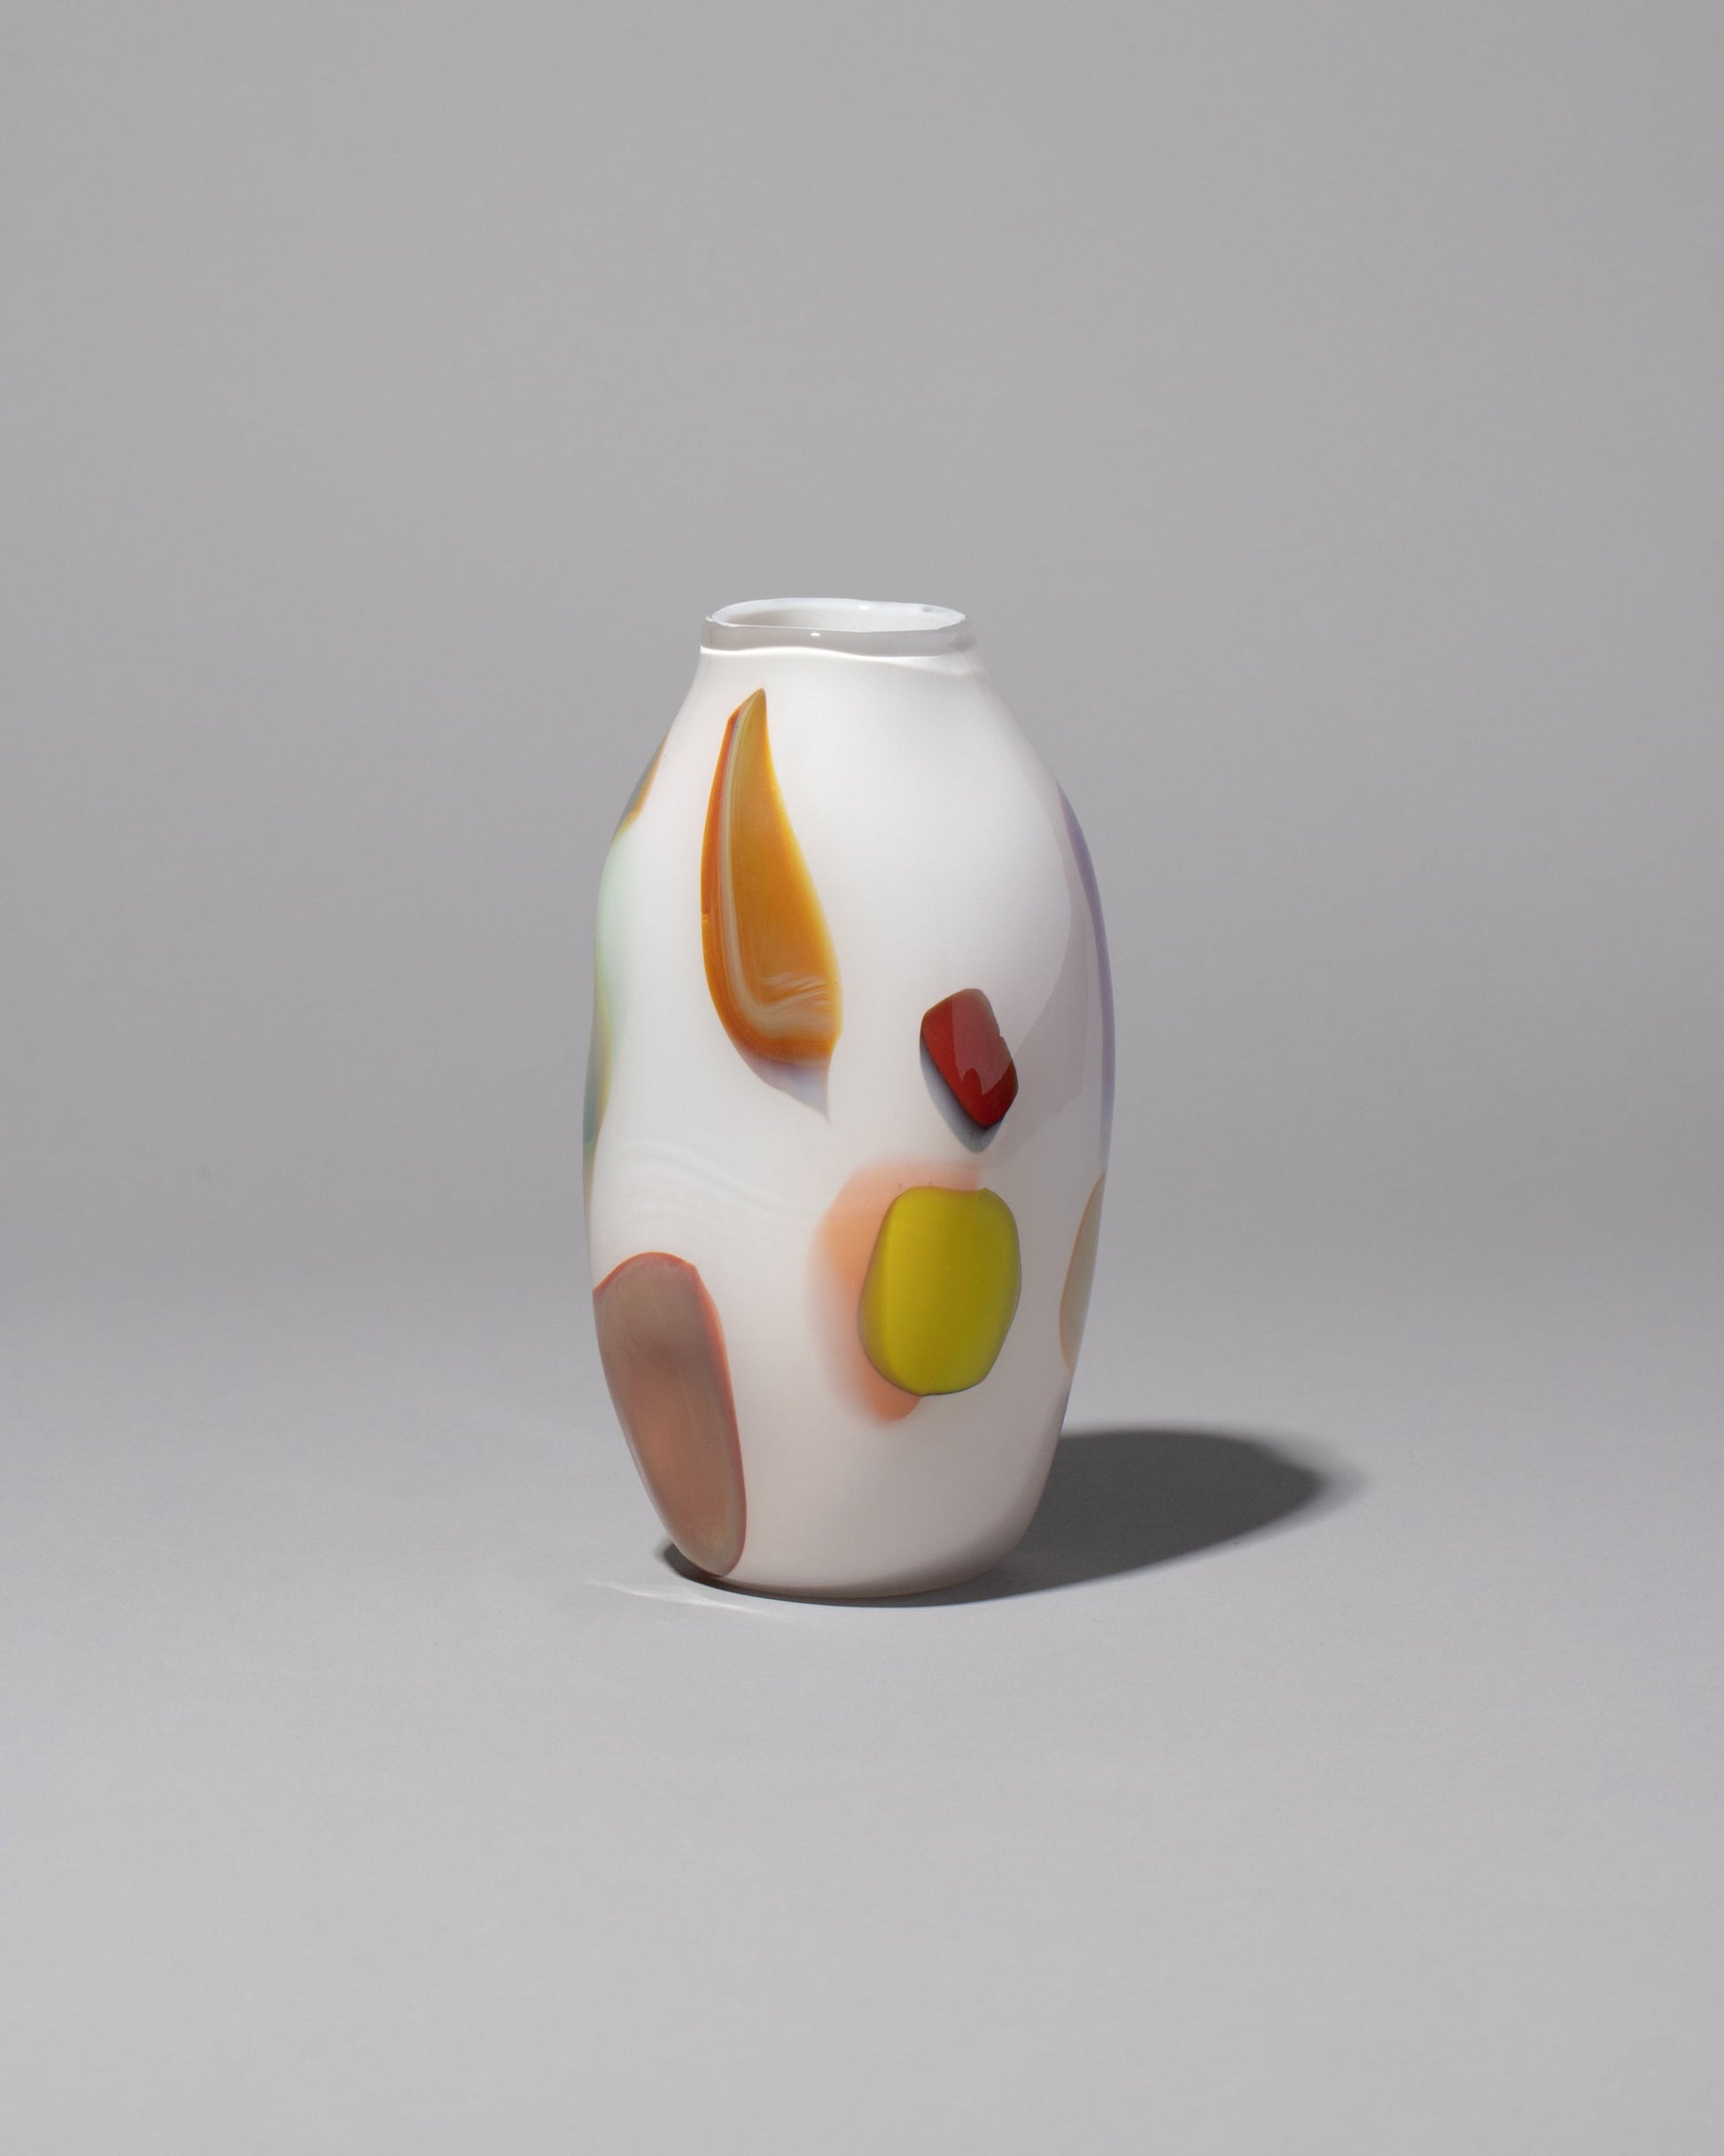 BaleFire Glass Small White Epiphany Vase on light color background.